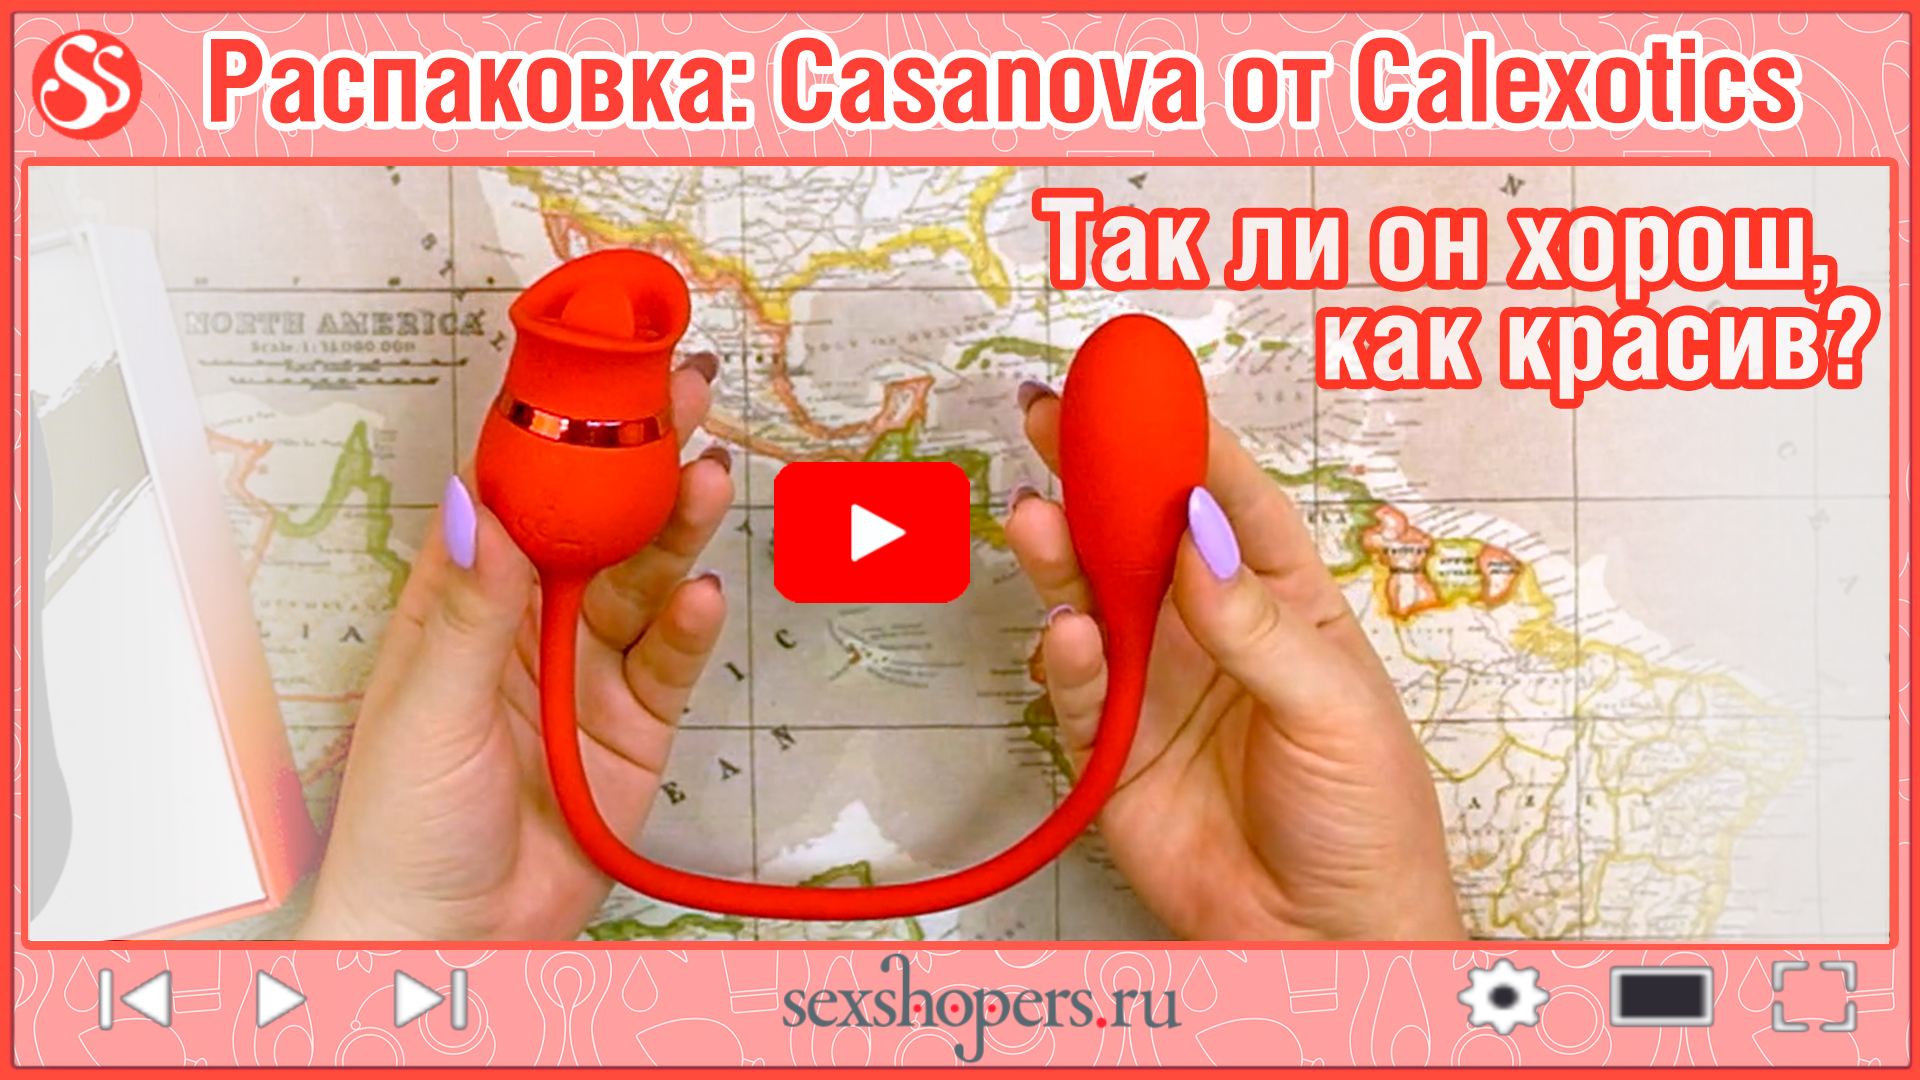 Casanova from CalExotics video